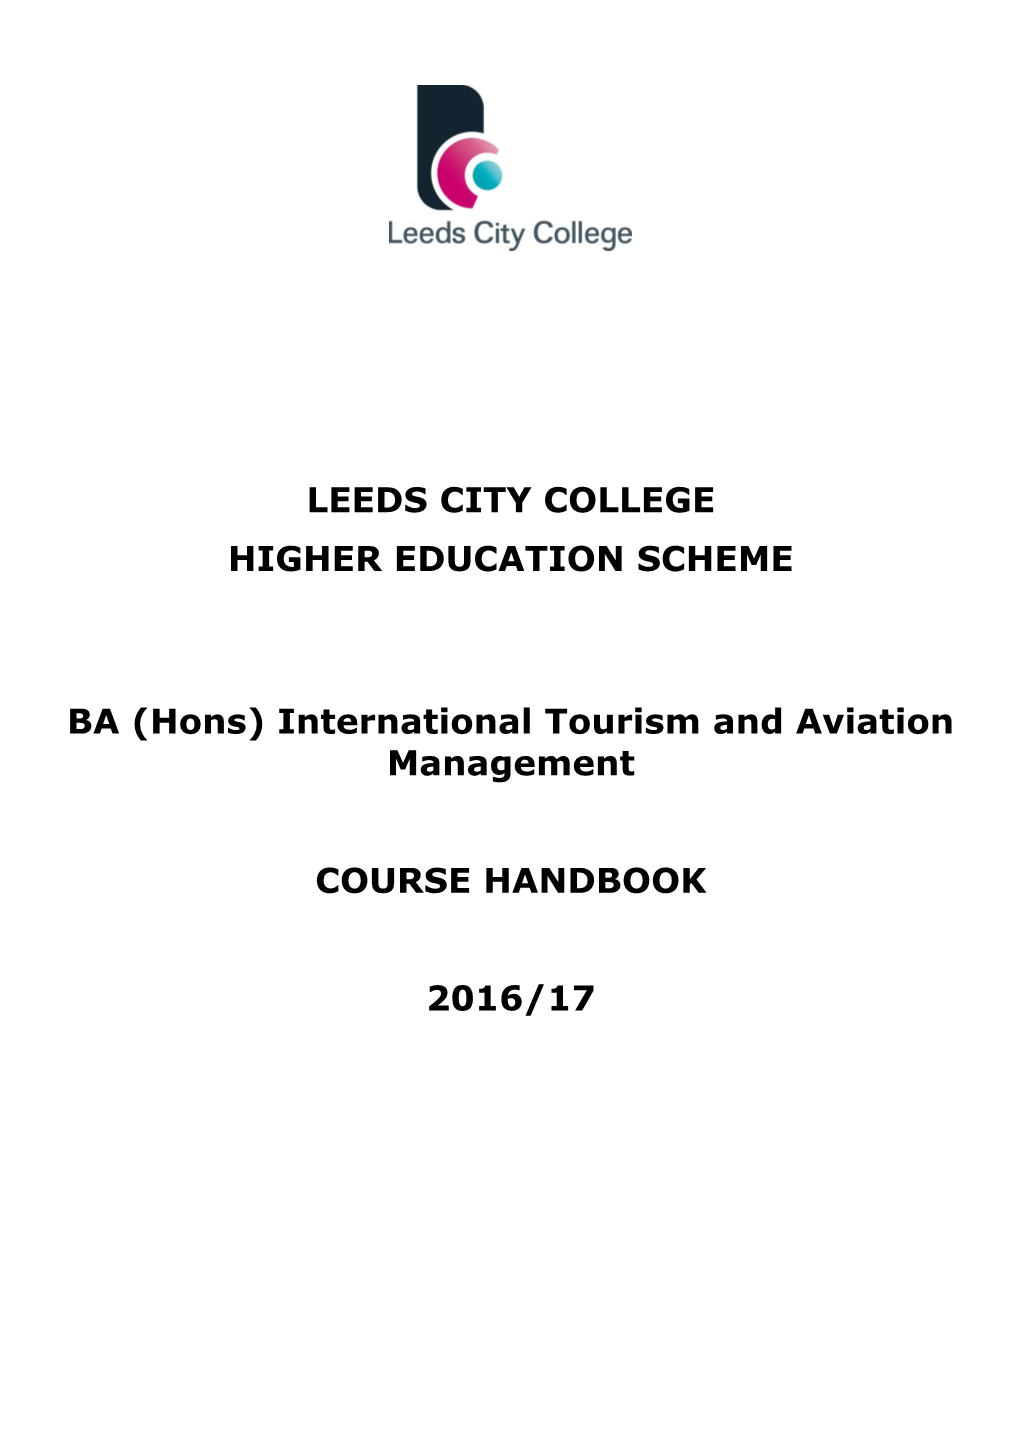 BA (Hons) International Tourism and Aviation Management